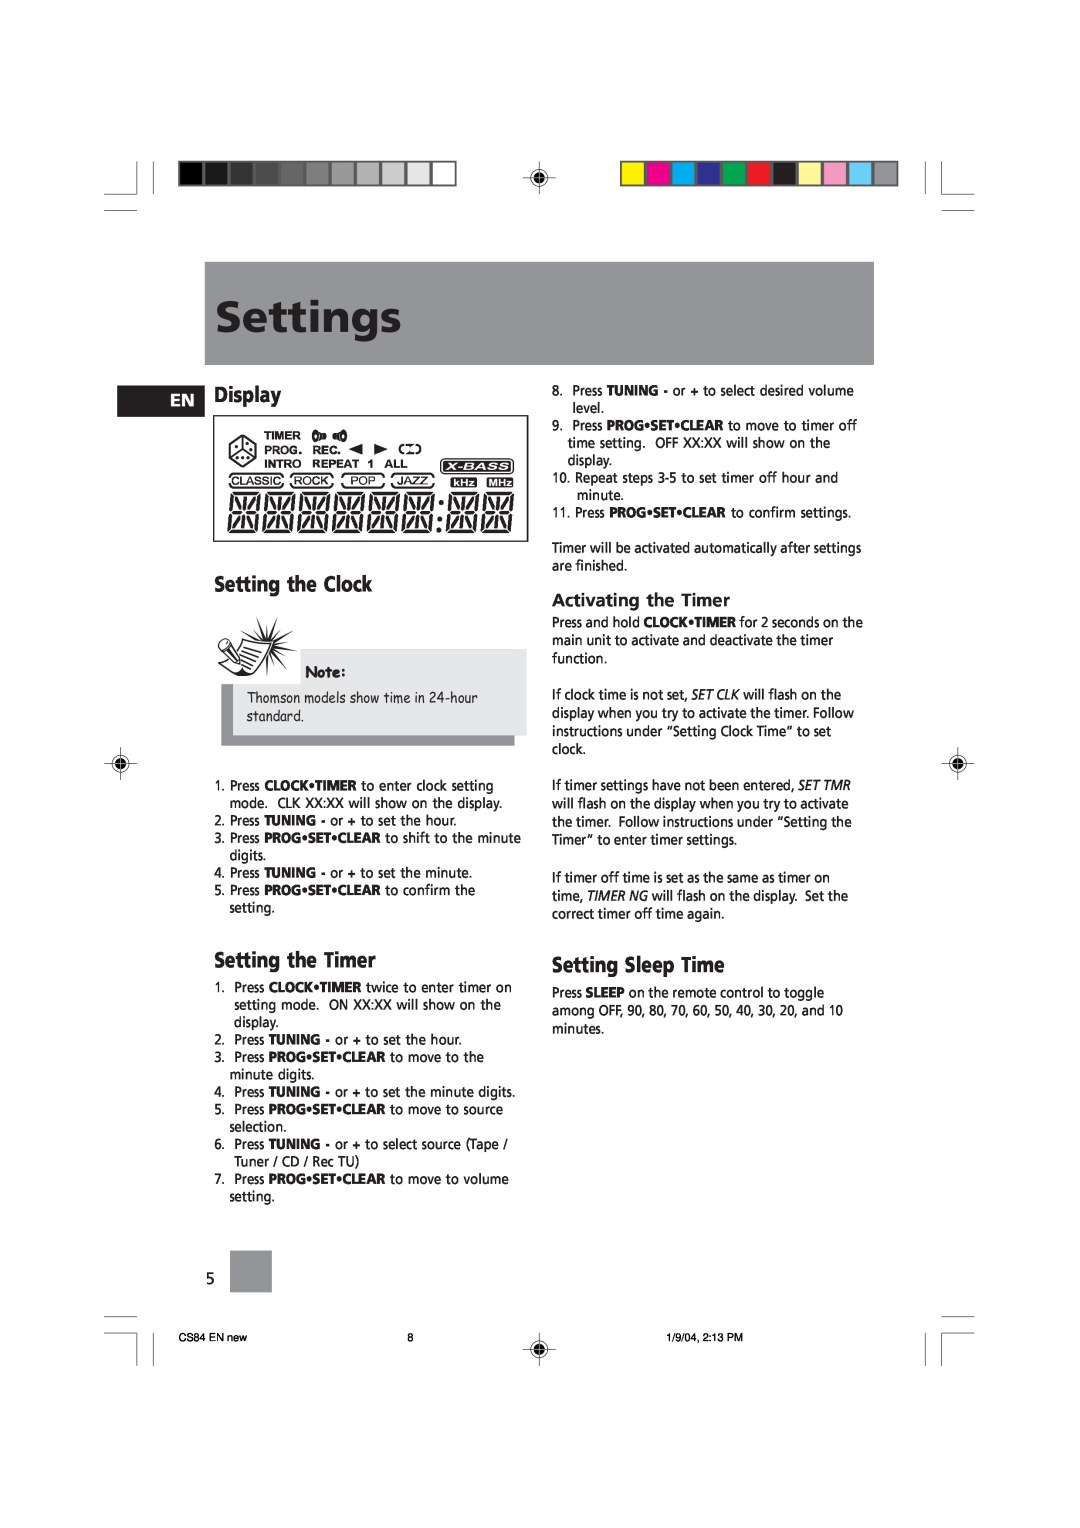 Technicolor - Thomson CS84 manual Settings, Display, Setting the Timer, Setting Sleep Time, Setting the Clock 